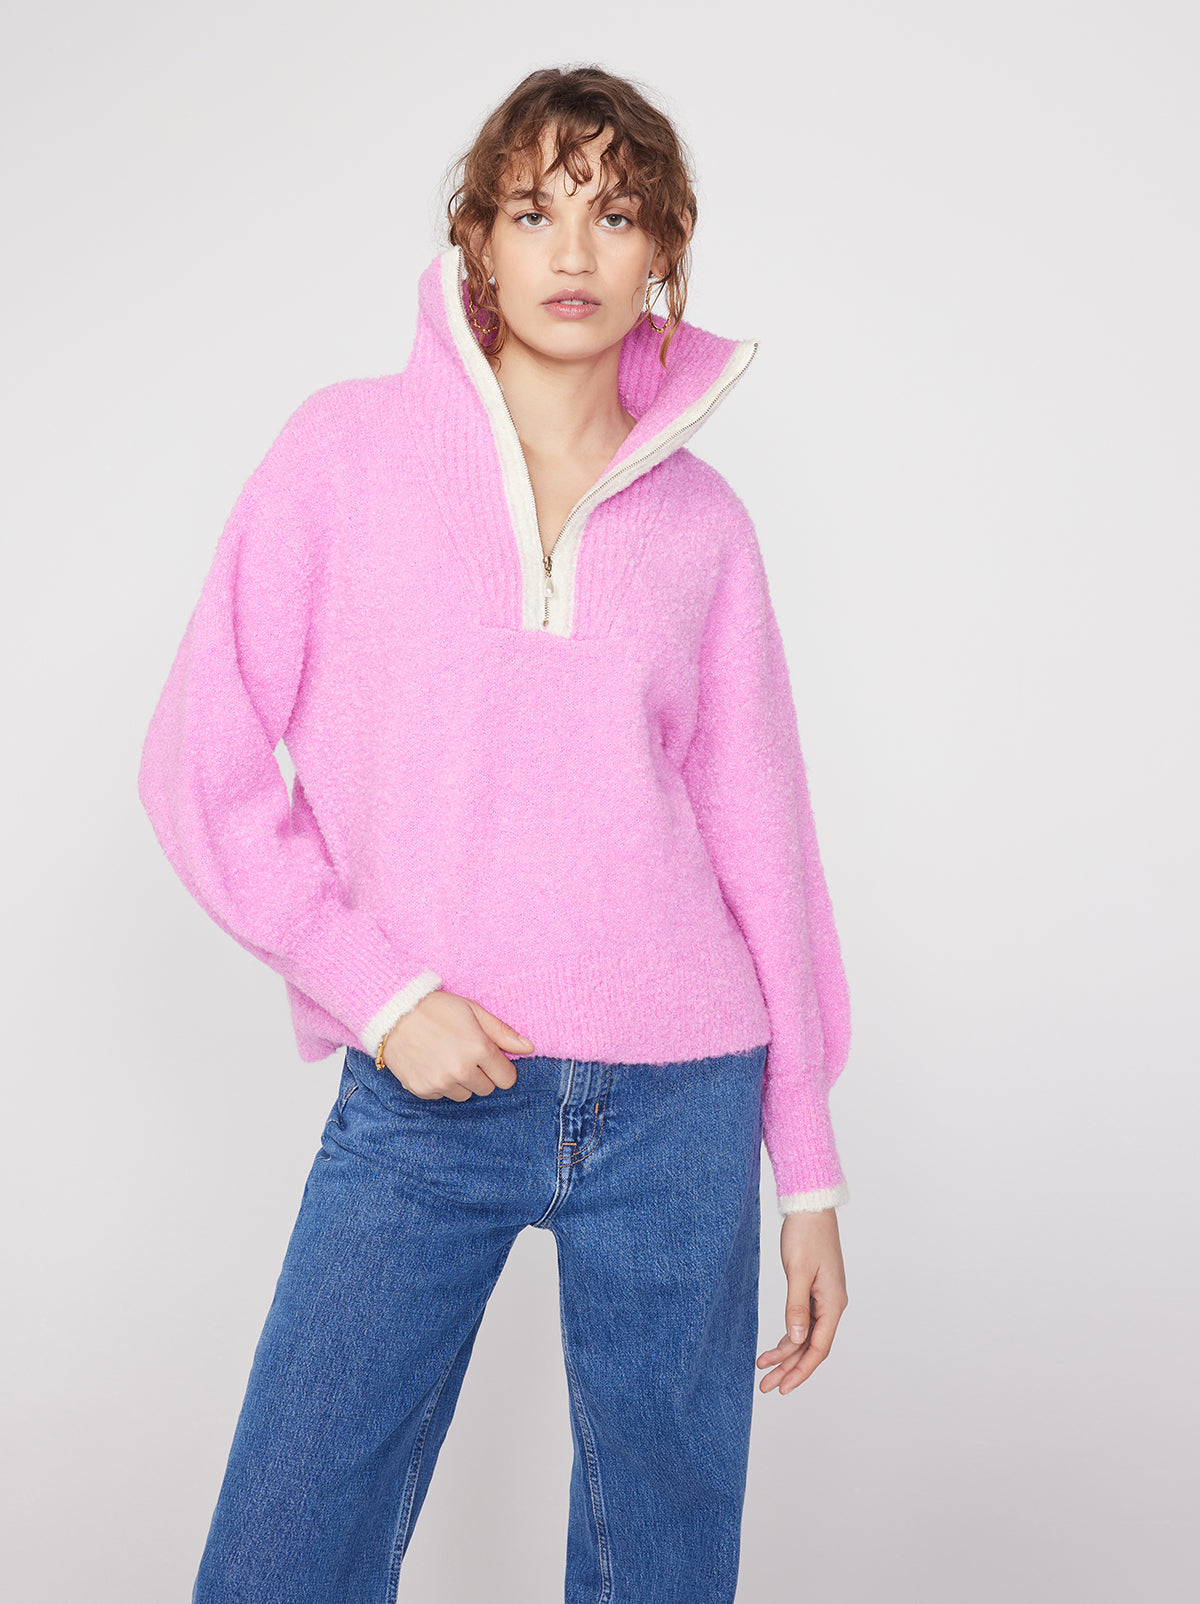 Lorna Pink Alpaca Blend Boulce Zip Up Sweater By KITRI Studio